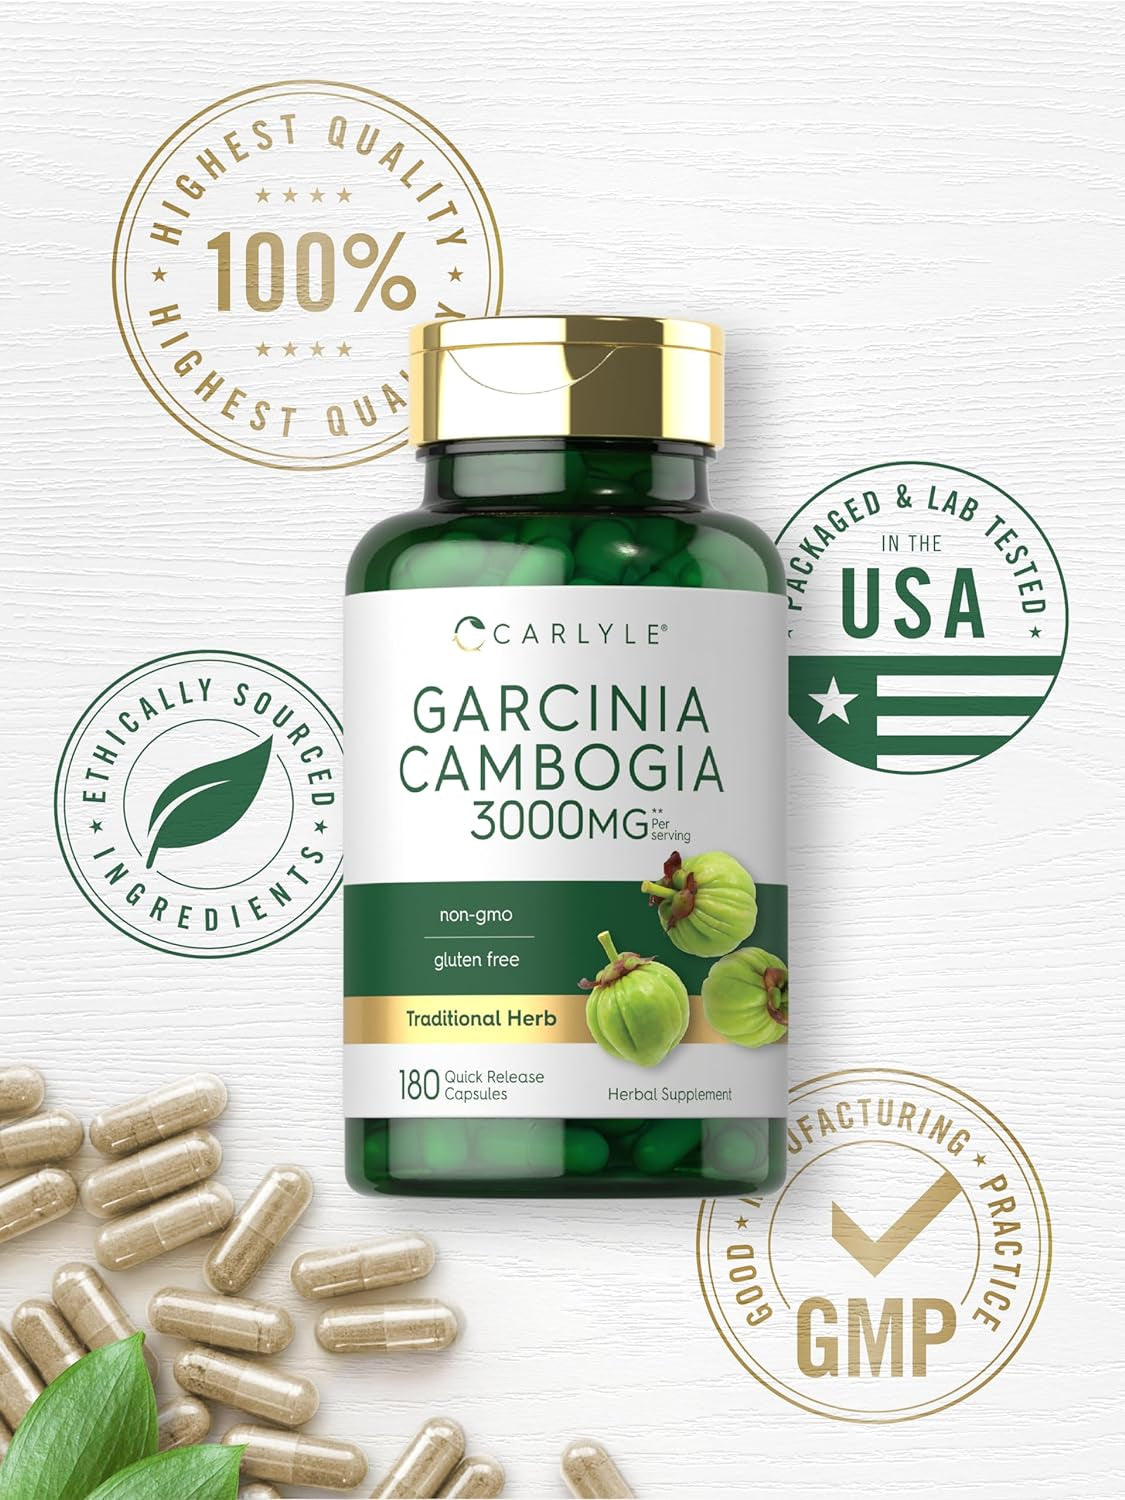 Carlyle Garcinia Cambogia 3000Mg | 180 Capsules | Non-Gmo, Gluten Free Supplement Extract